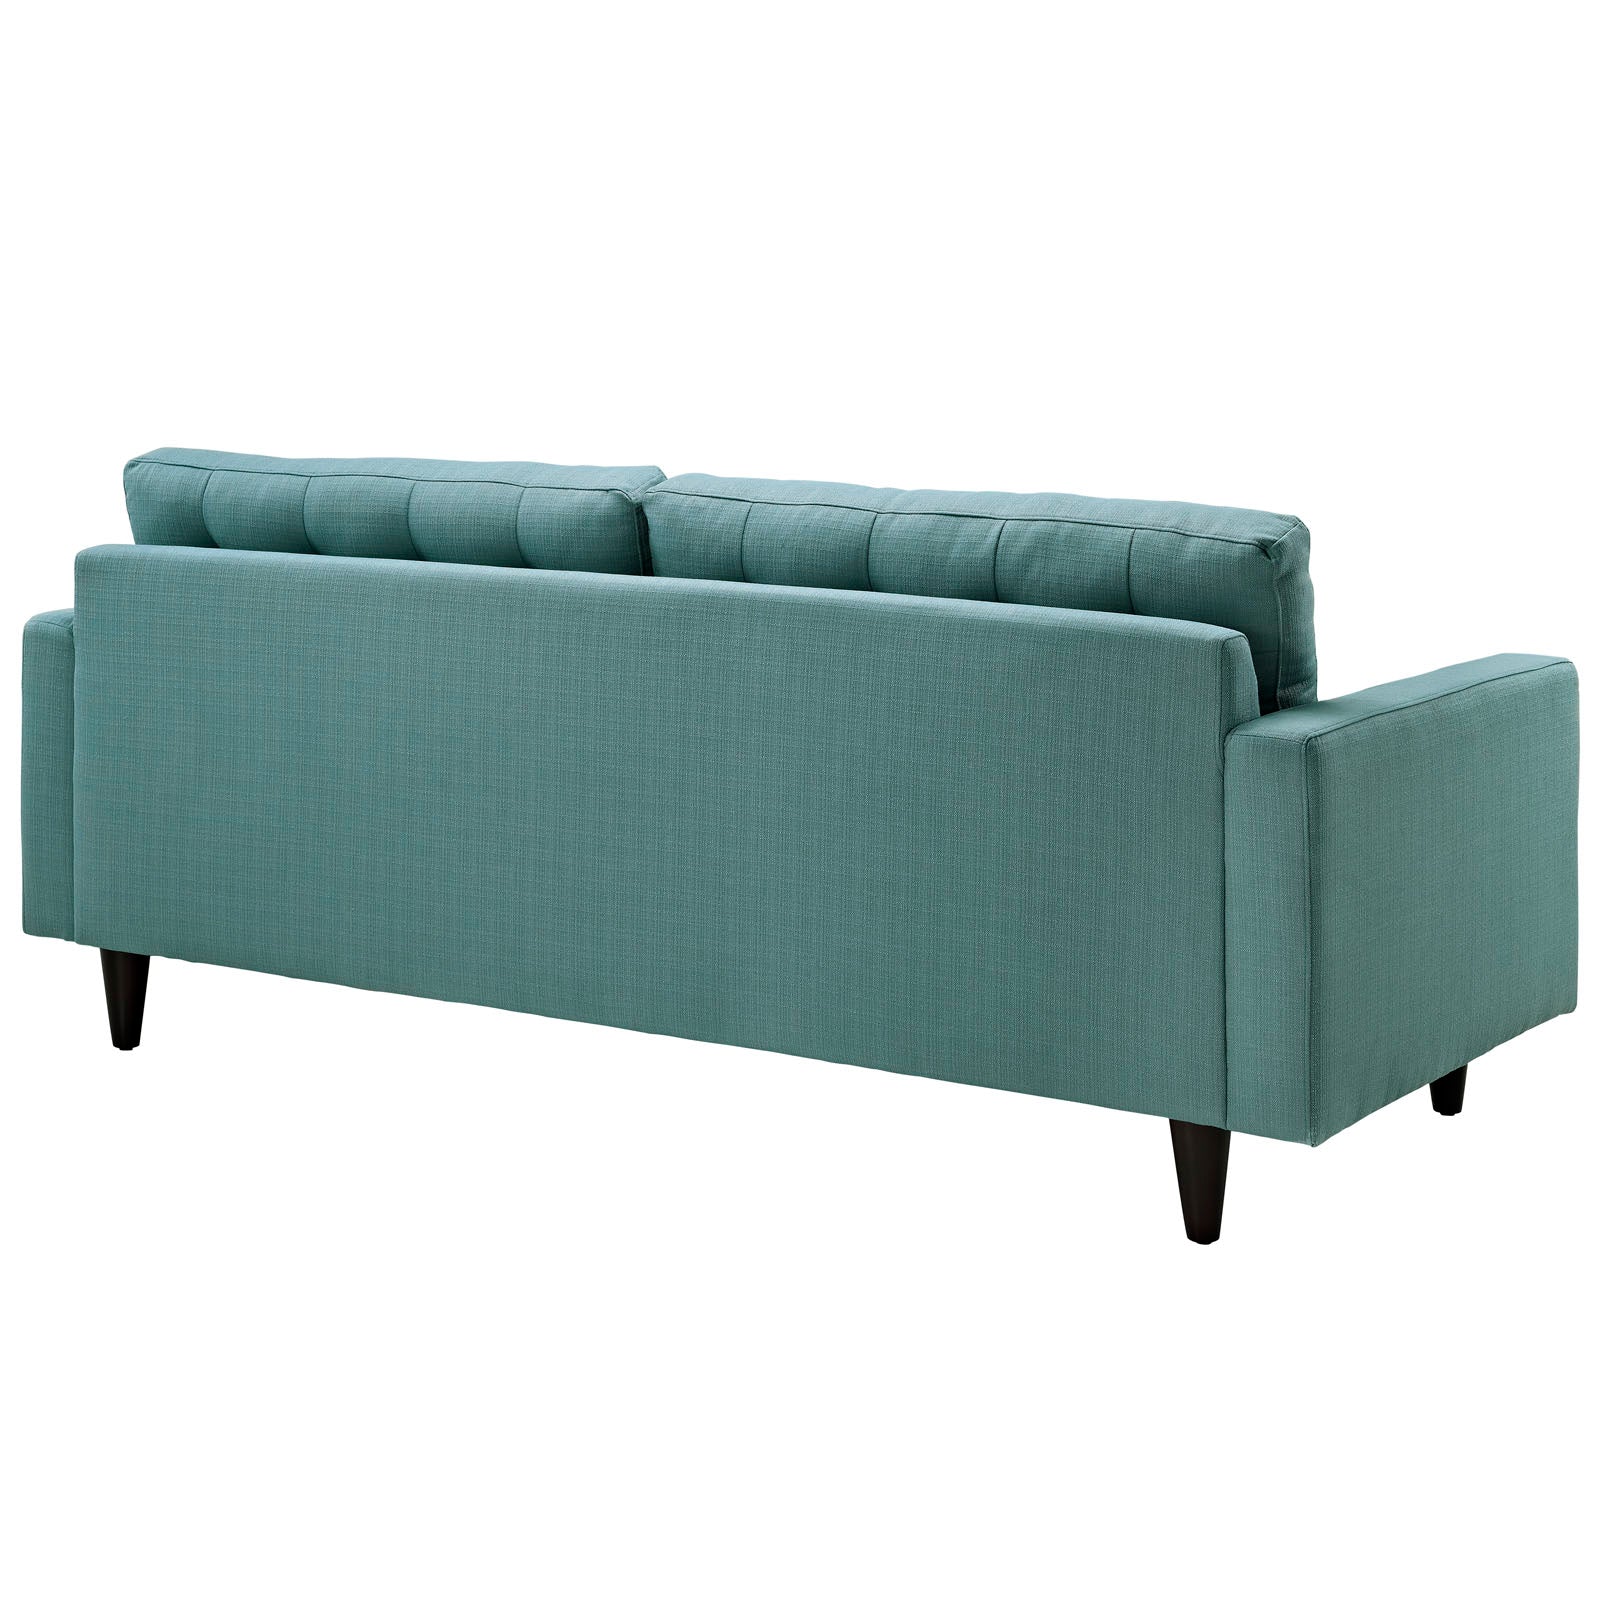 Modway Living Room Sets - Empress Sofa And Armchairs Set Of 3 Laguna